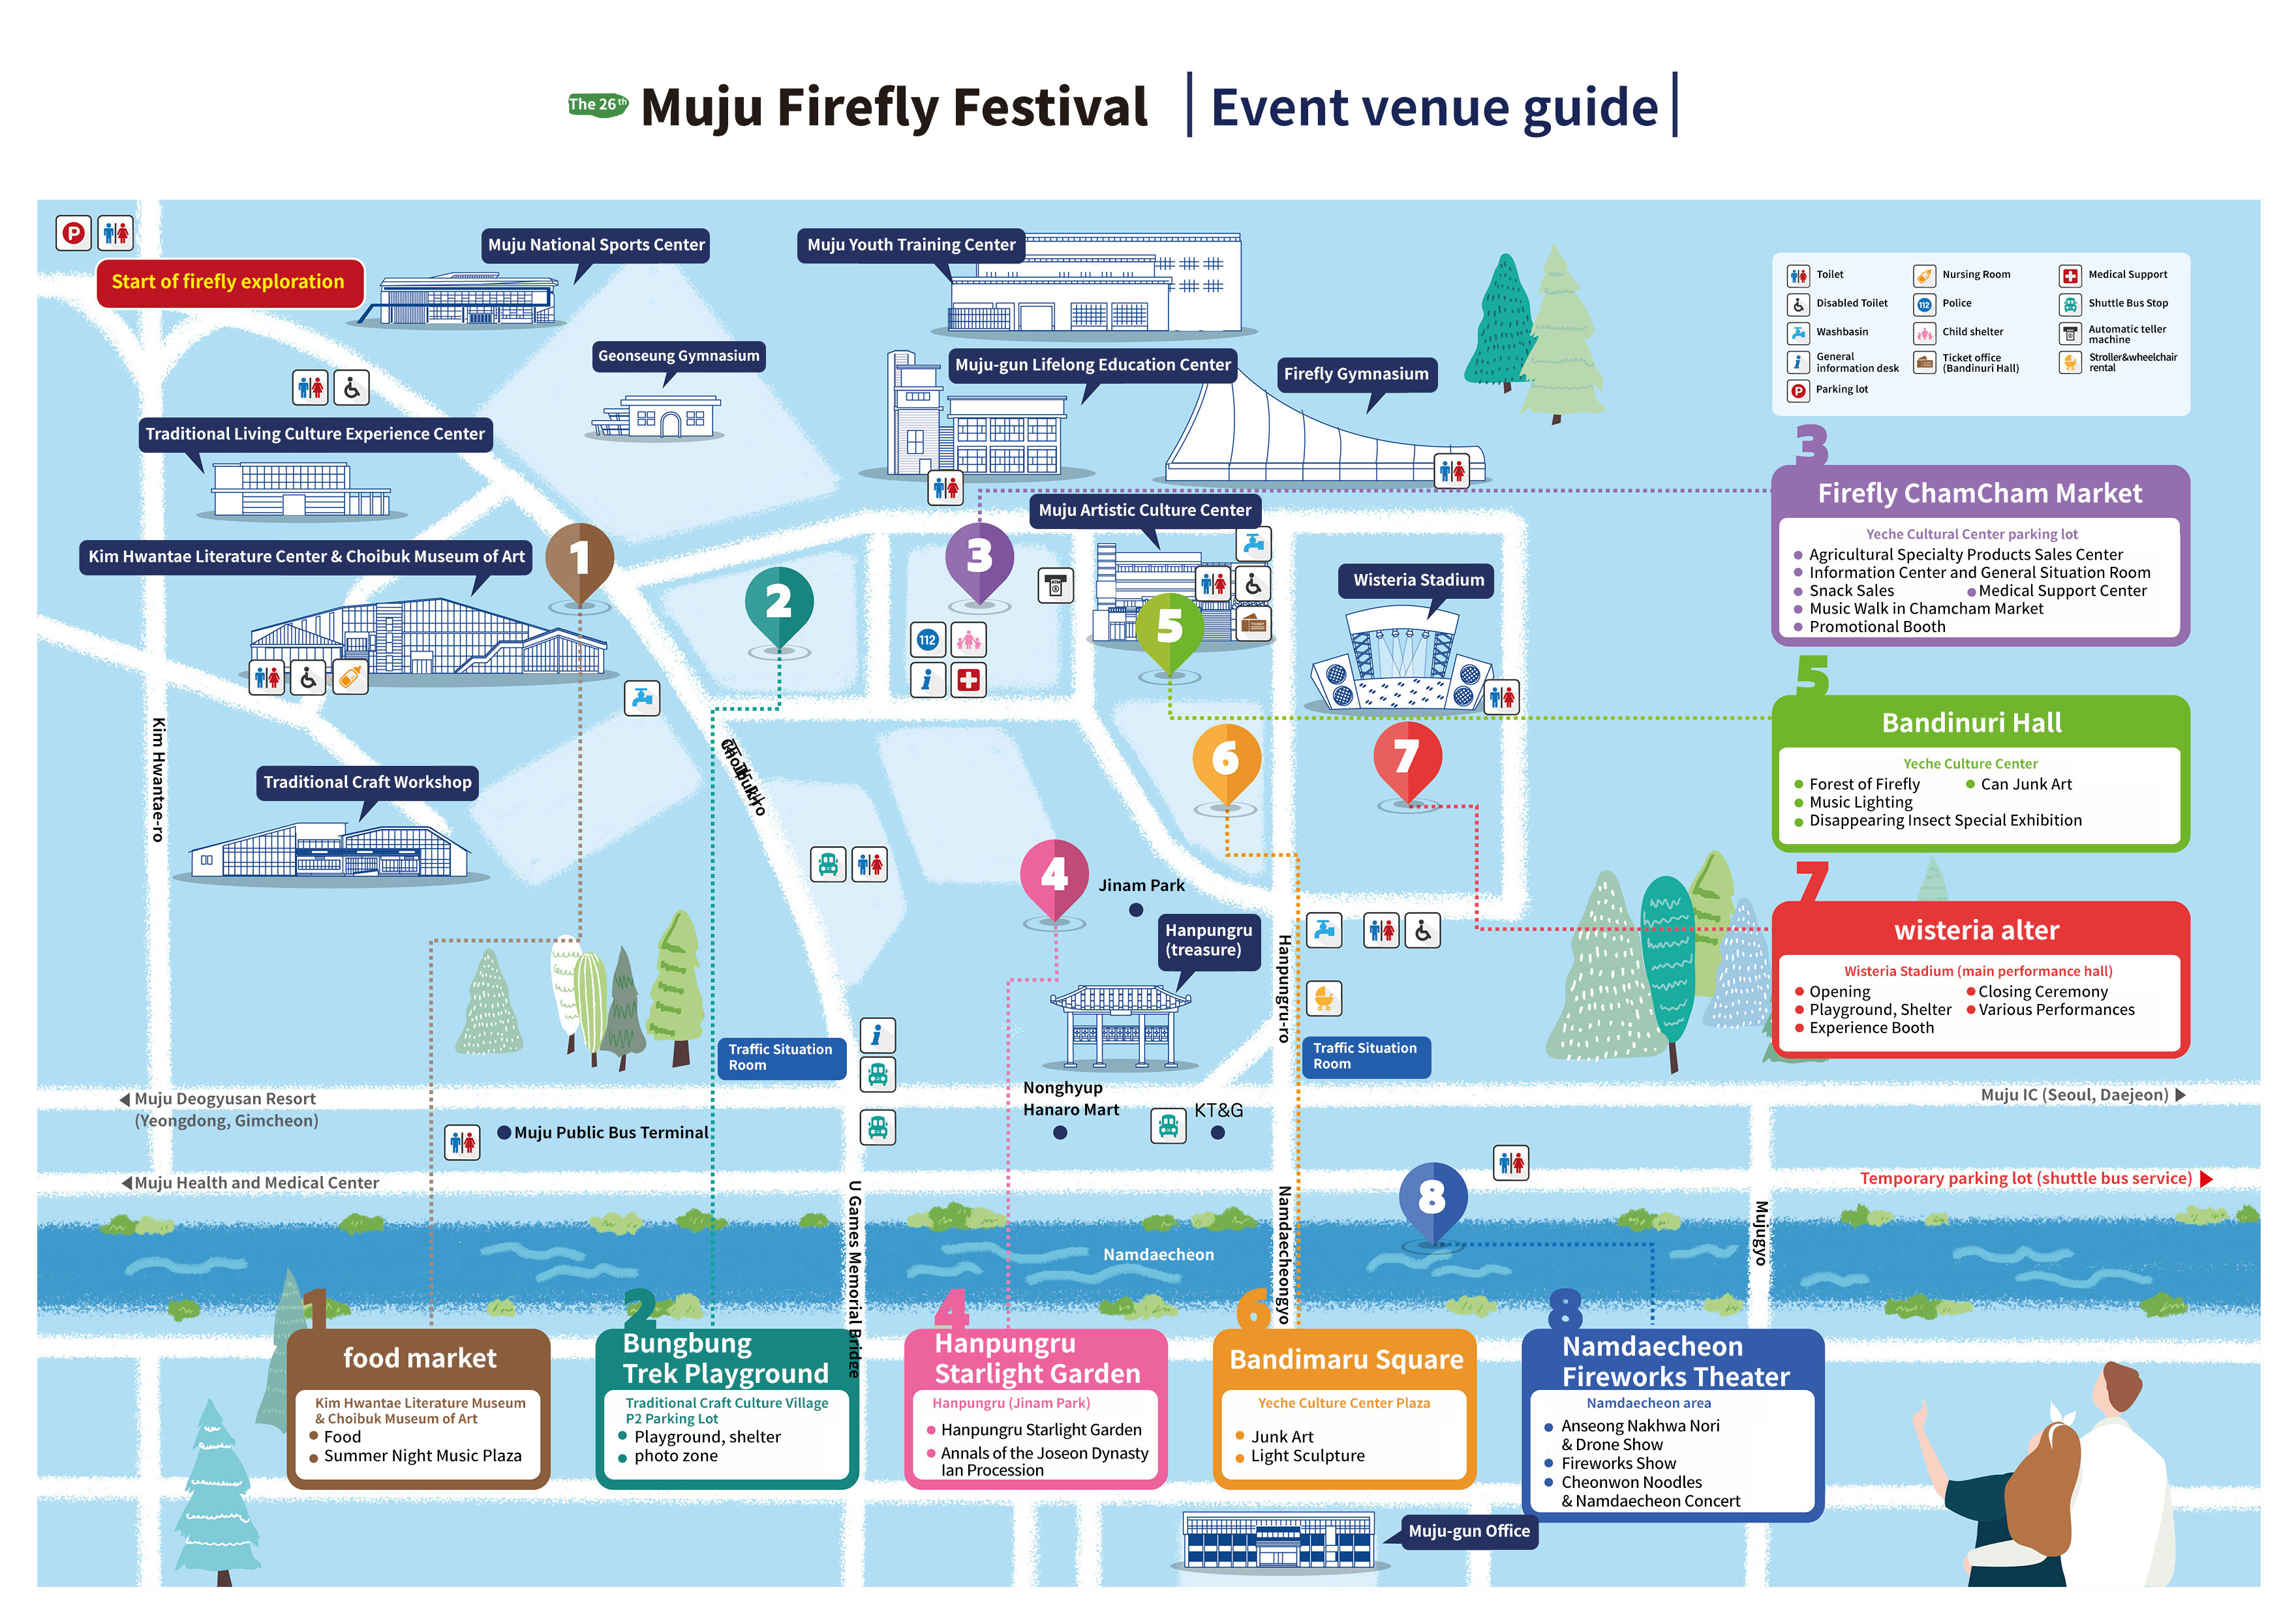 Muju Firefly Festival